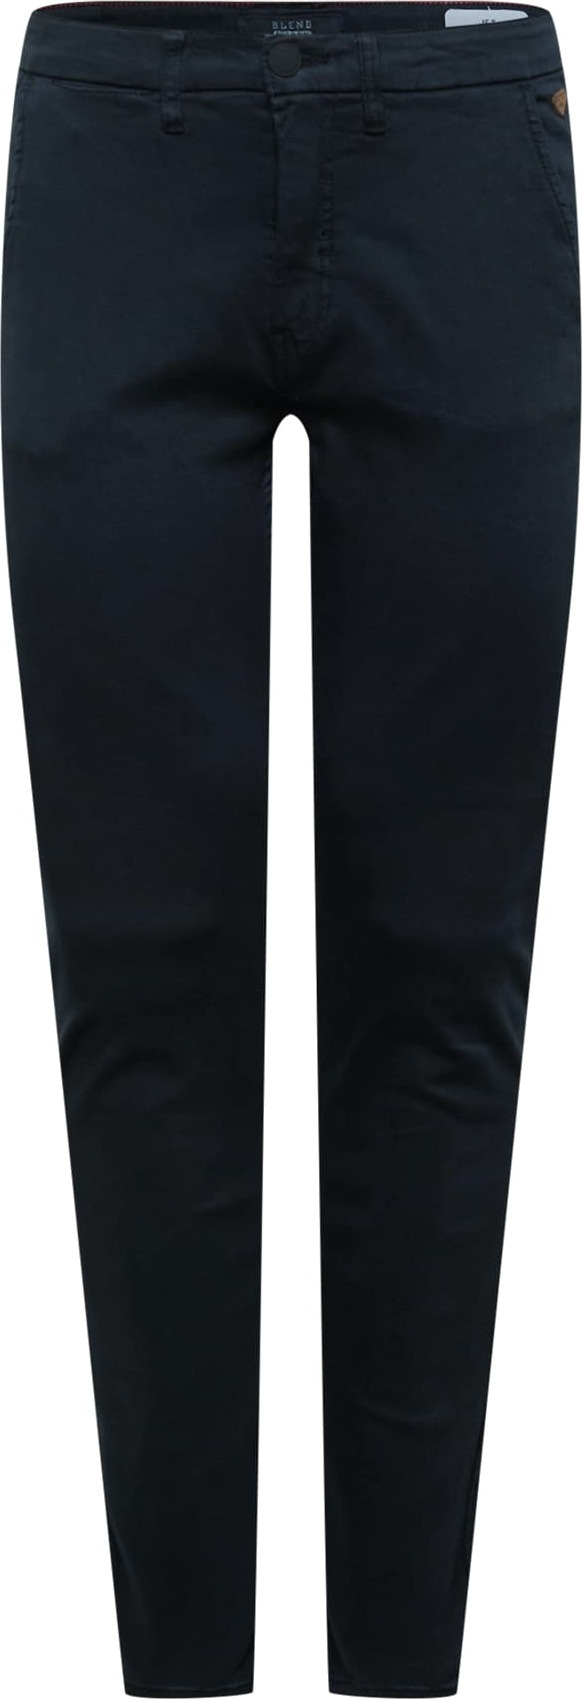 BLEND Chino kalhoty 'Multiflex' černá